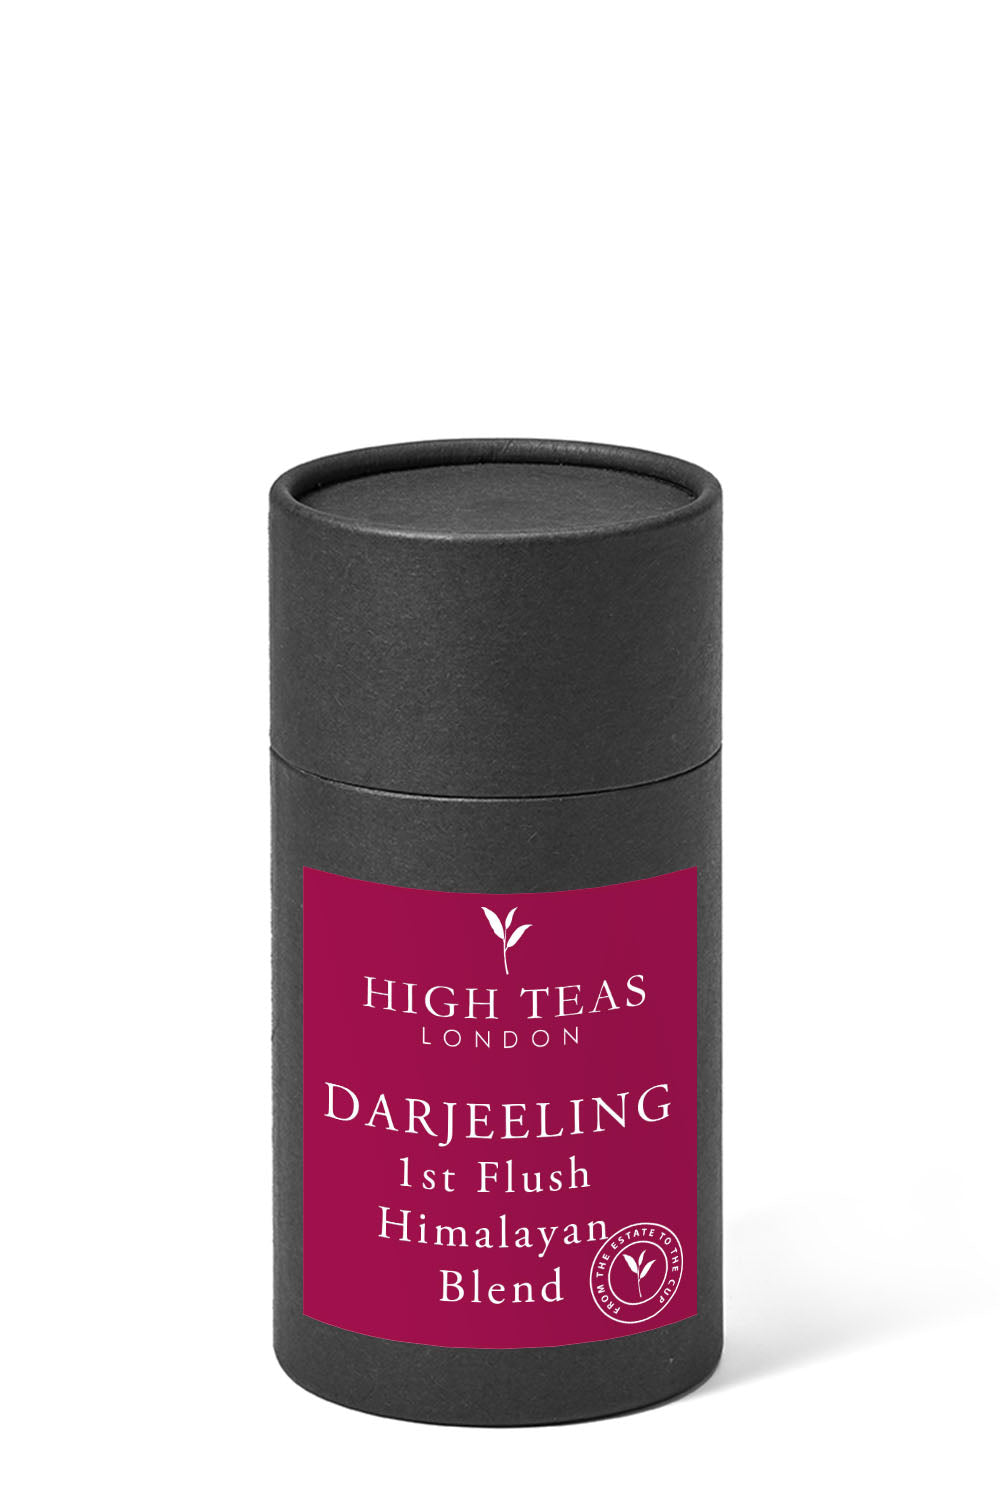 Darjeeling 2nd Flush Himalayan Blend-60g gift-Loose Leaf Tea-High Teas